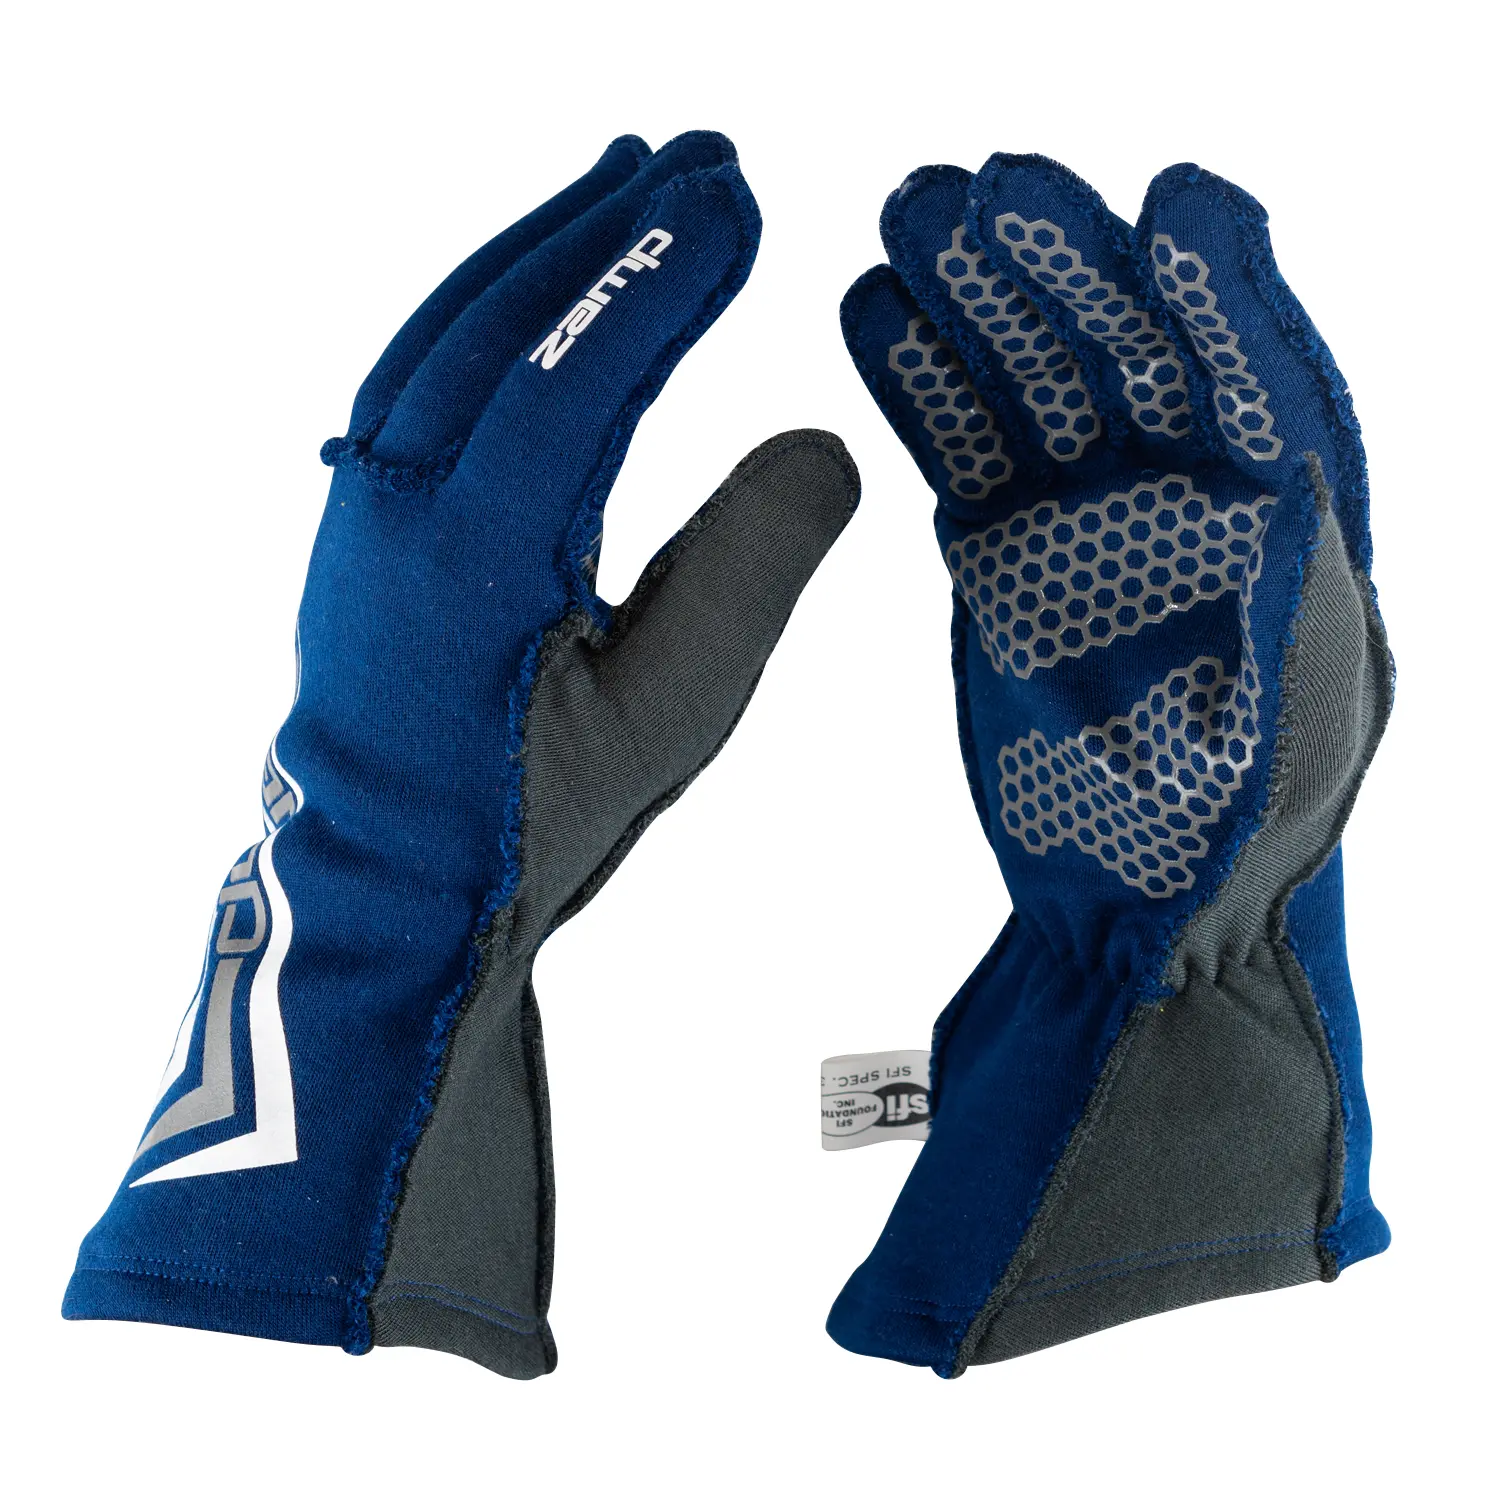 ZR-60 Race Gloves